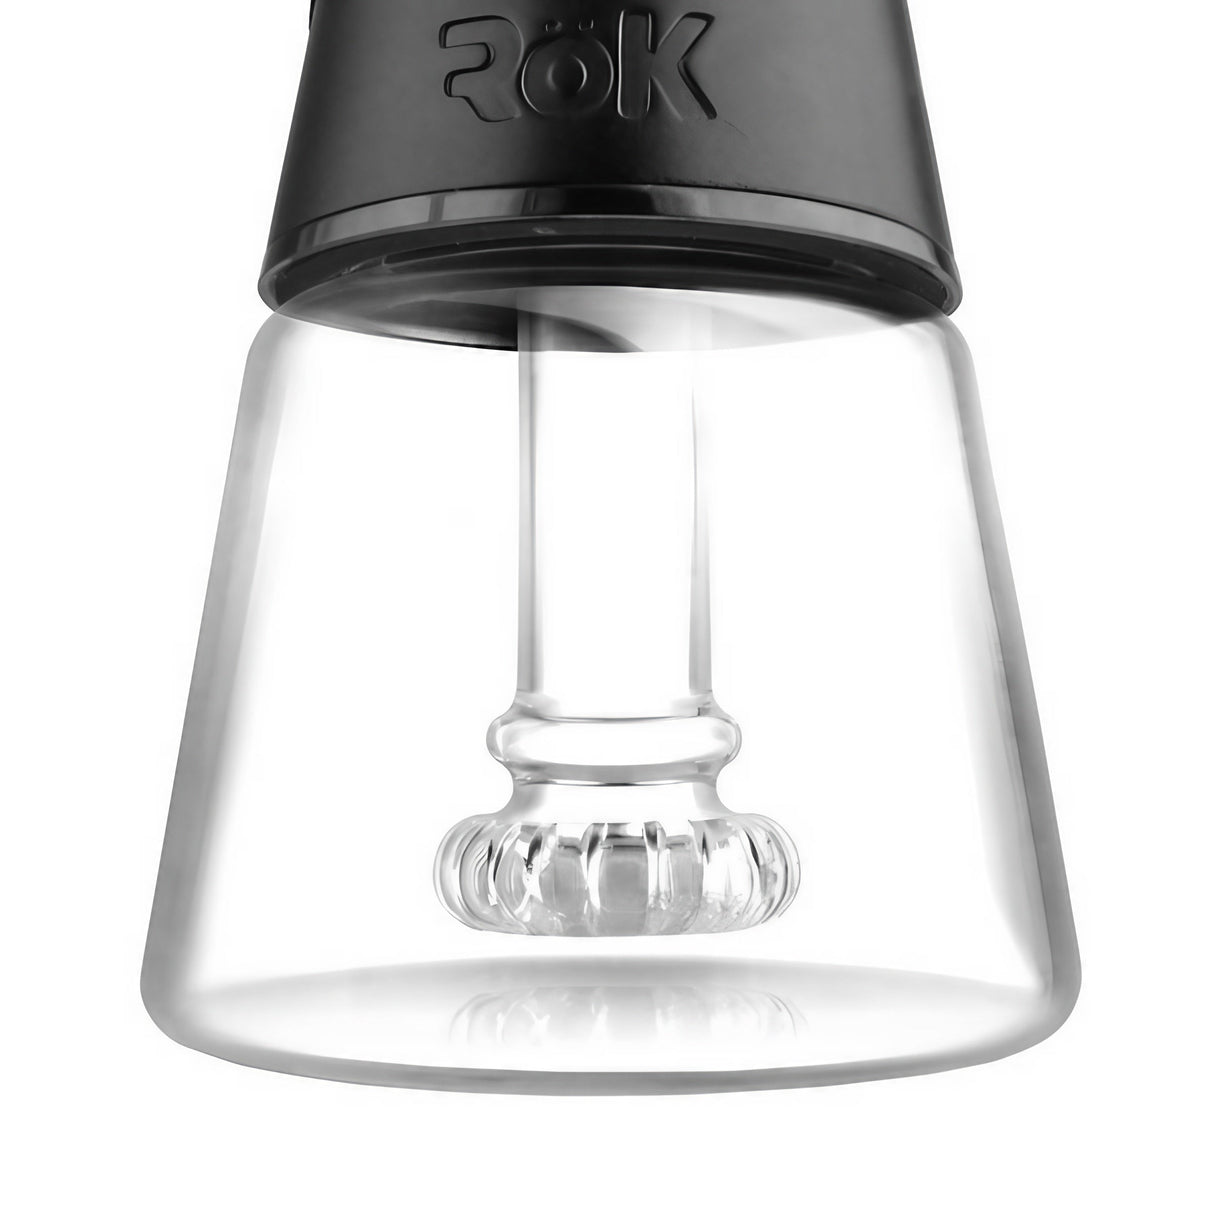 Pulsar RöK Electric Dab Rig Luna Edition, glow-in-the-dark feature, quartz coil, side view